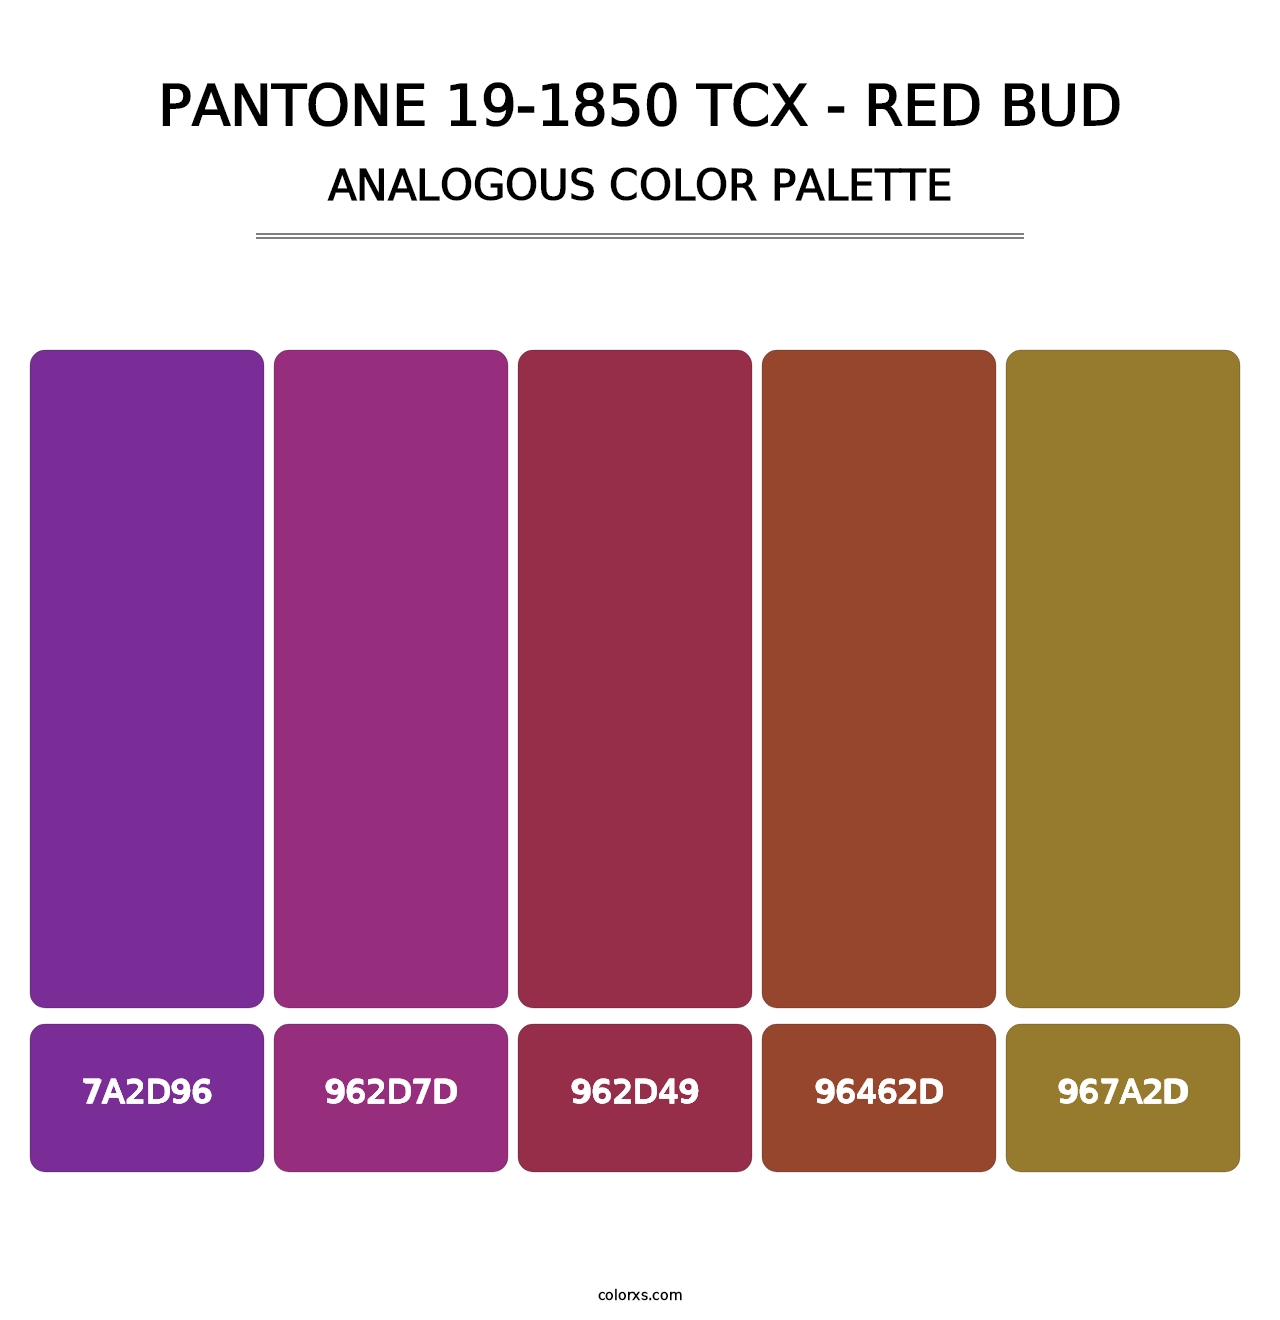 PANTONE 19-1850 TCX - Red Bud - Analogous Color Palette